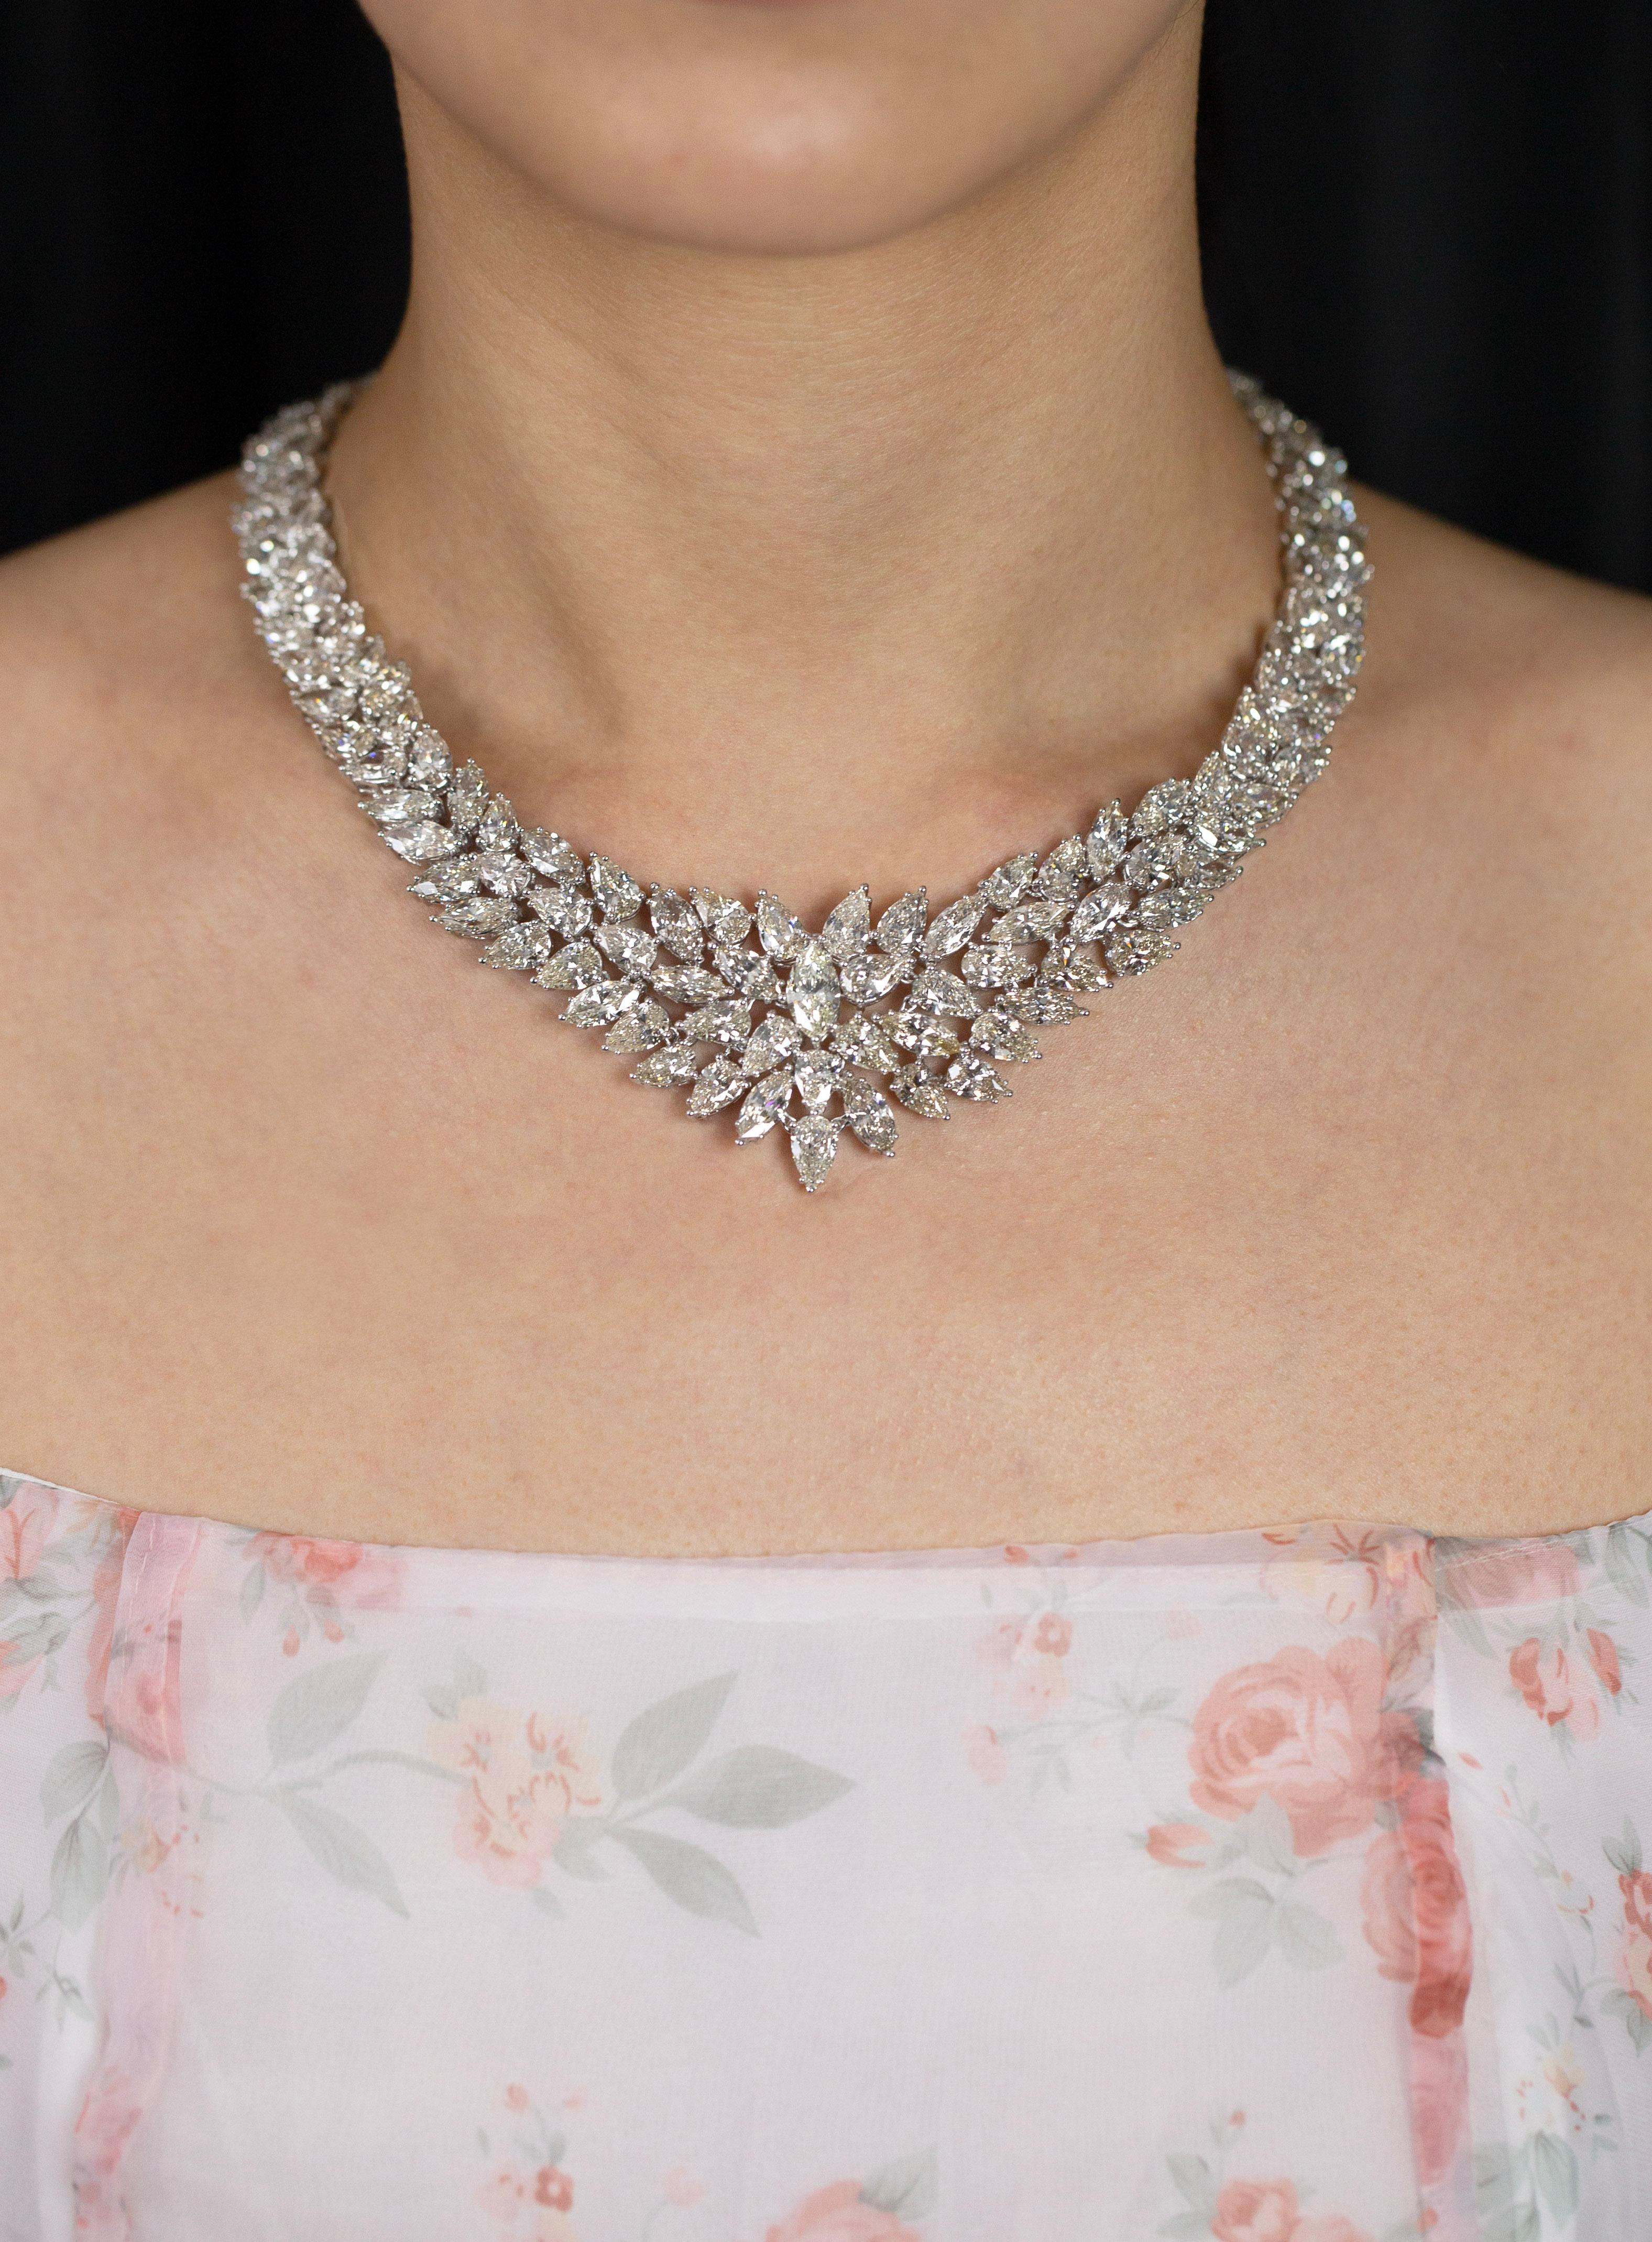 Contemporary Roman Malakov 115.20 Carat Total Mixed Cut Cluster Diamond Pendant Necklace For Sale